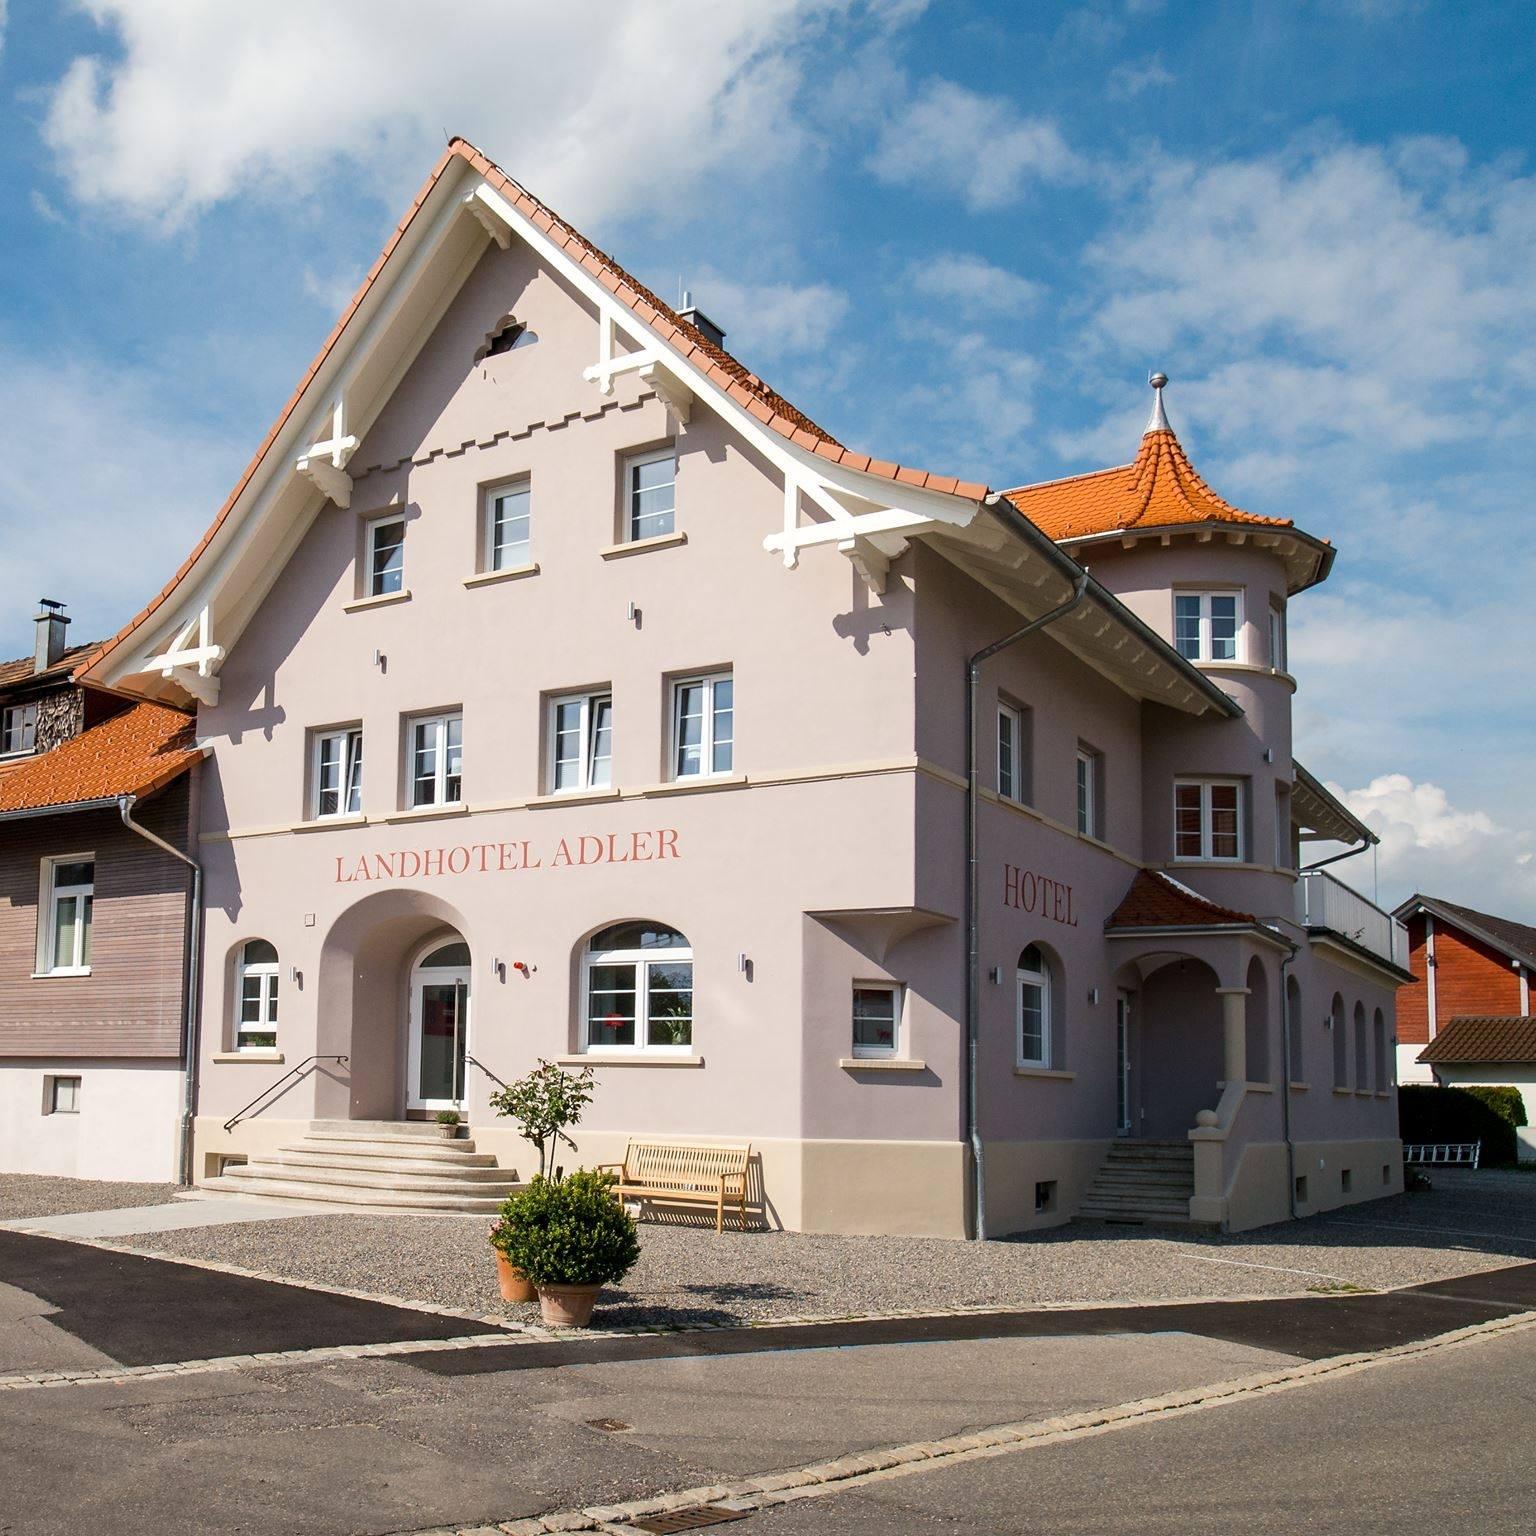 Restaurant "Landhotel Adler" in  Sigmarszell